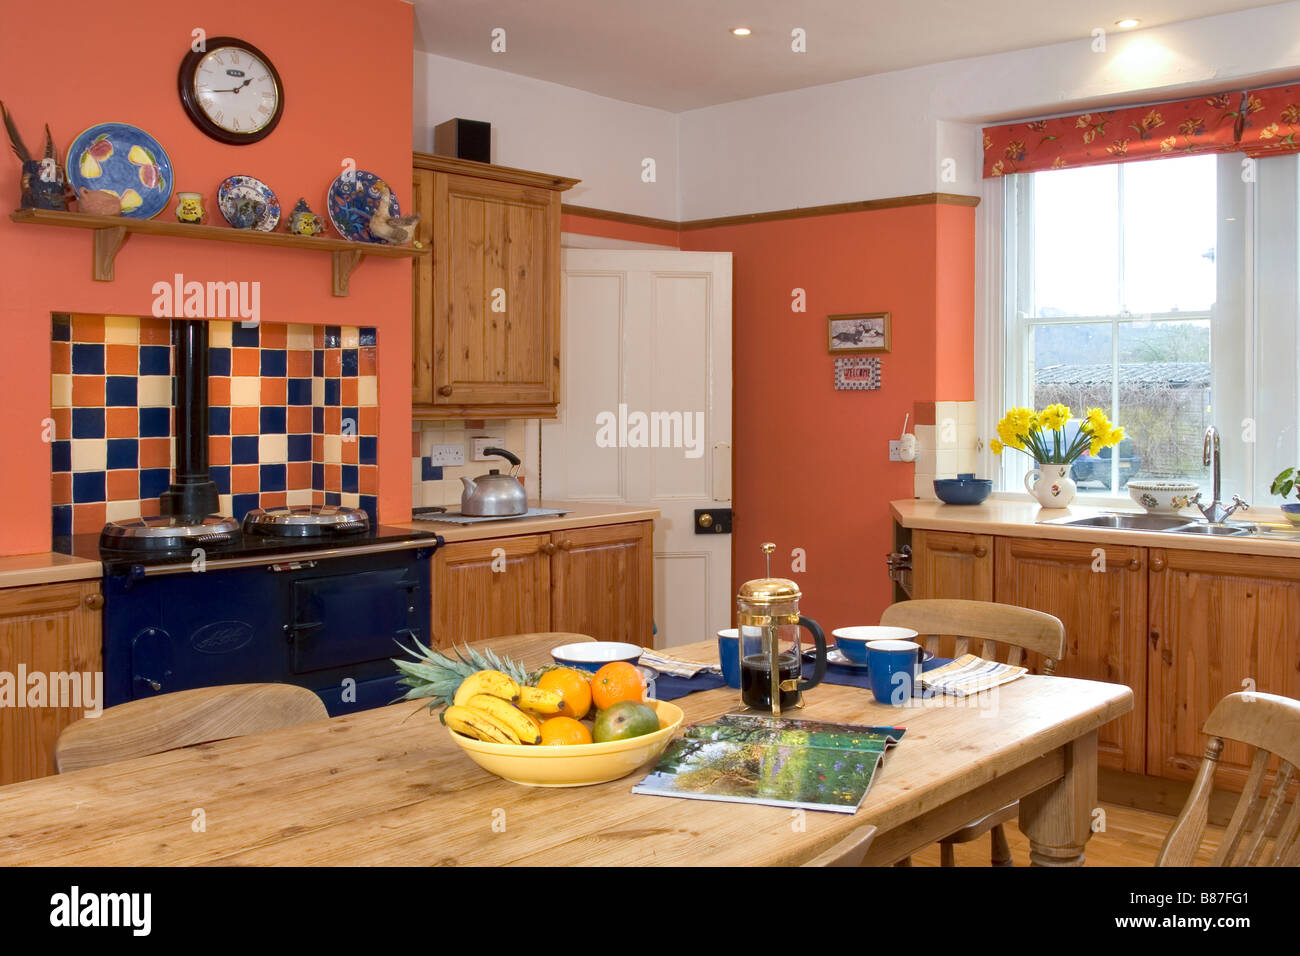 UK. A house interior, kitchen diner. Stock Photo